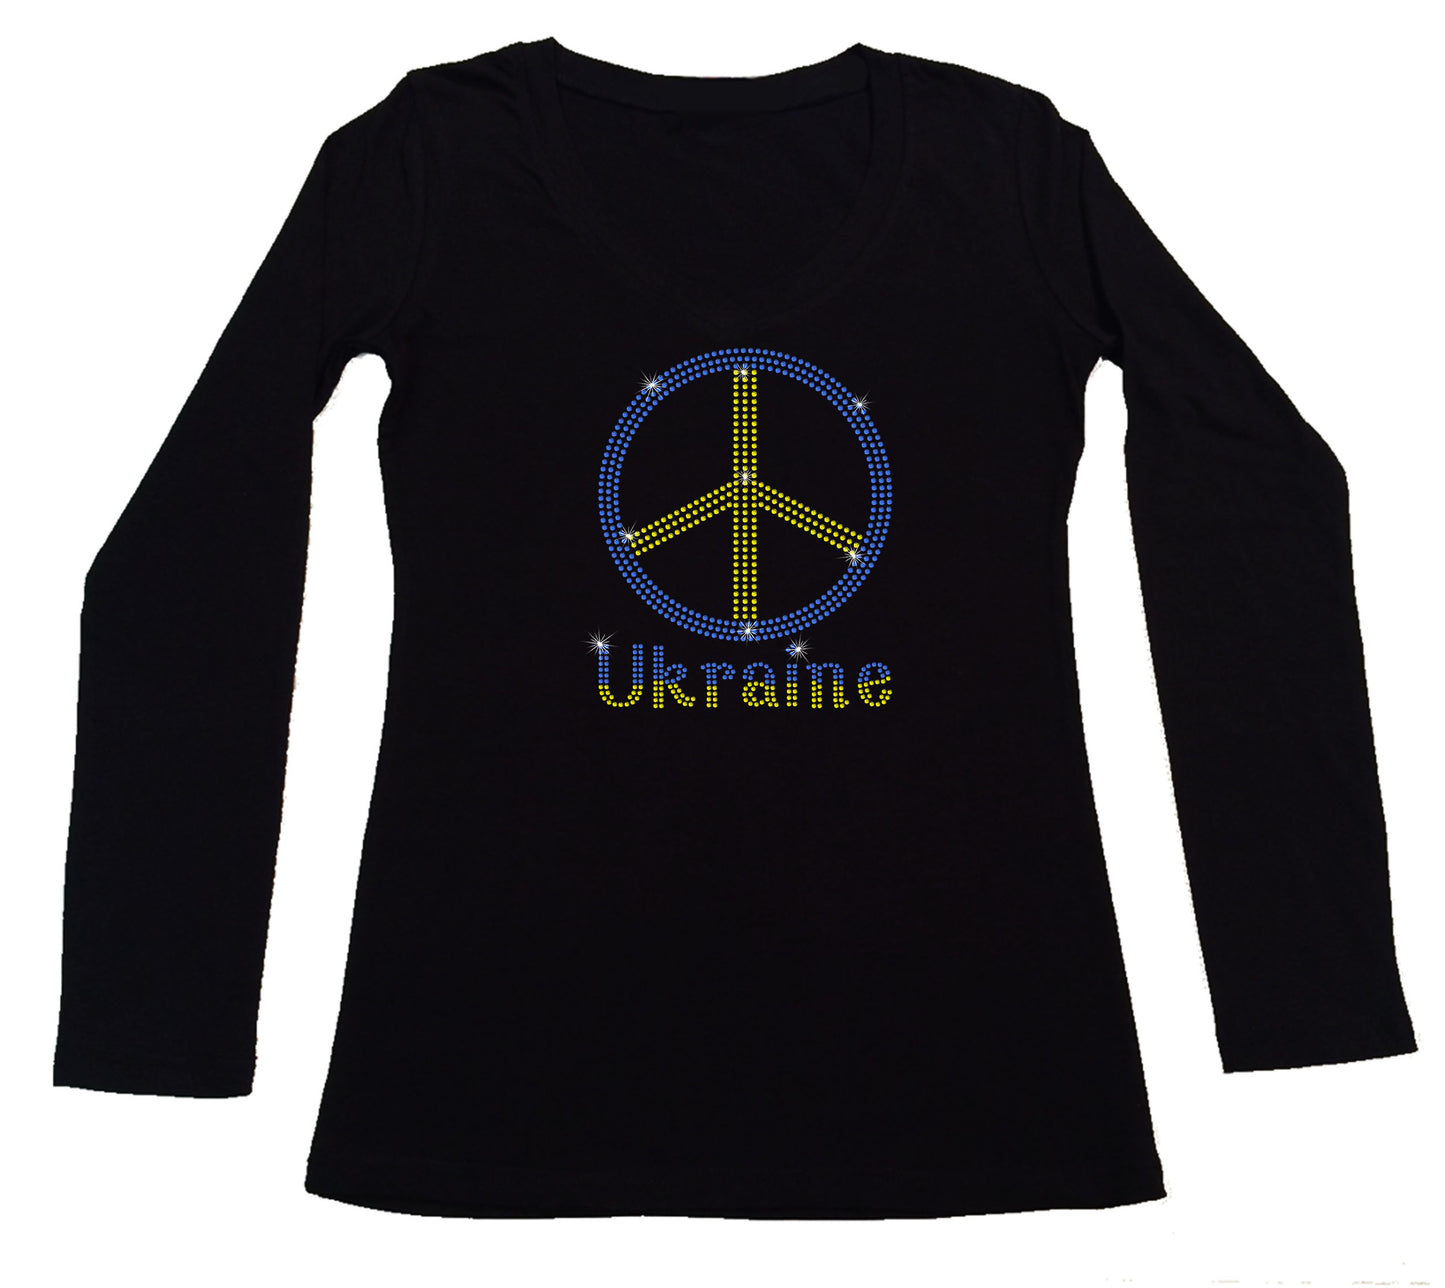 Women's Rhinestone Fitted Tight Snug Shirt Peace in Ukraine - Ukrainian Colors Peace Sign, Support for Ukraine